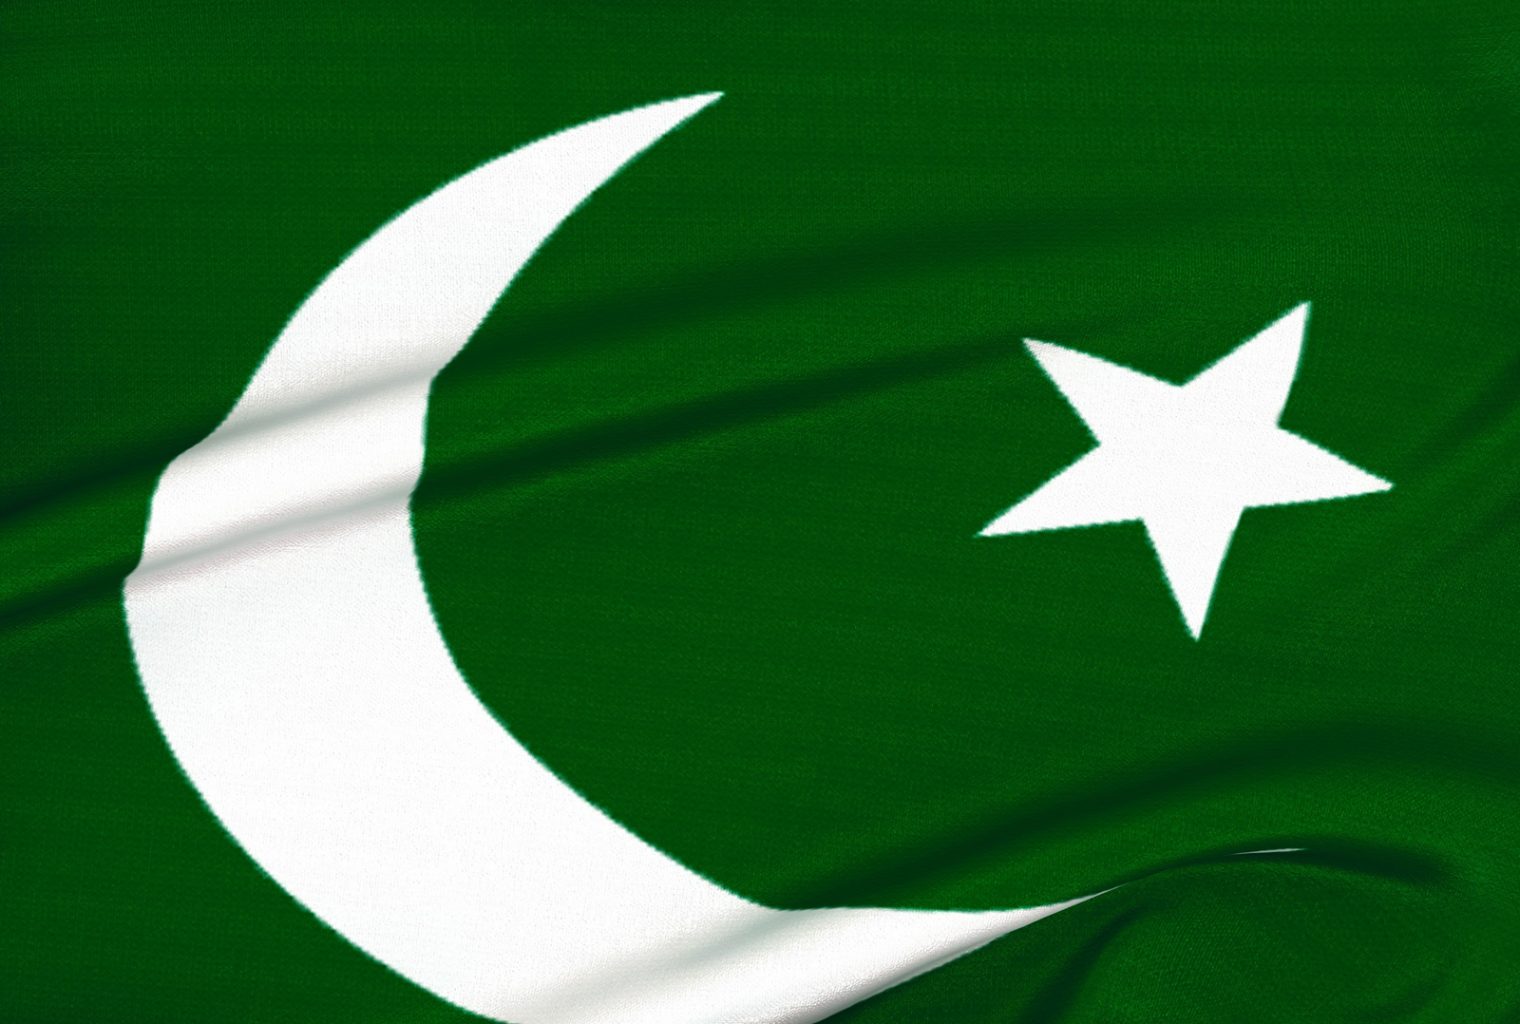 Pakistanis Find Ways To Trade Bitcoin Rendering Ban Ineffective - 